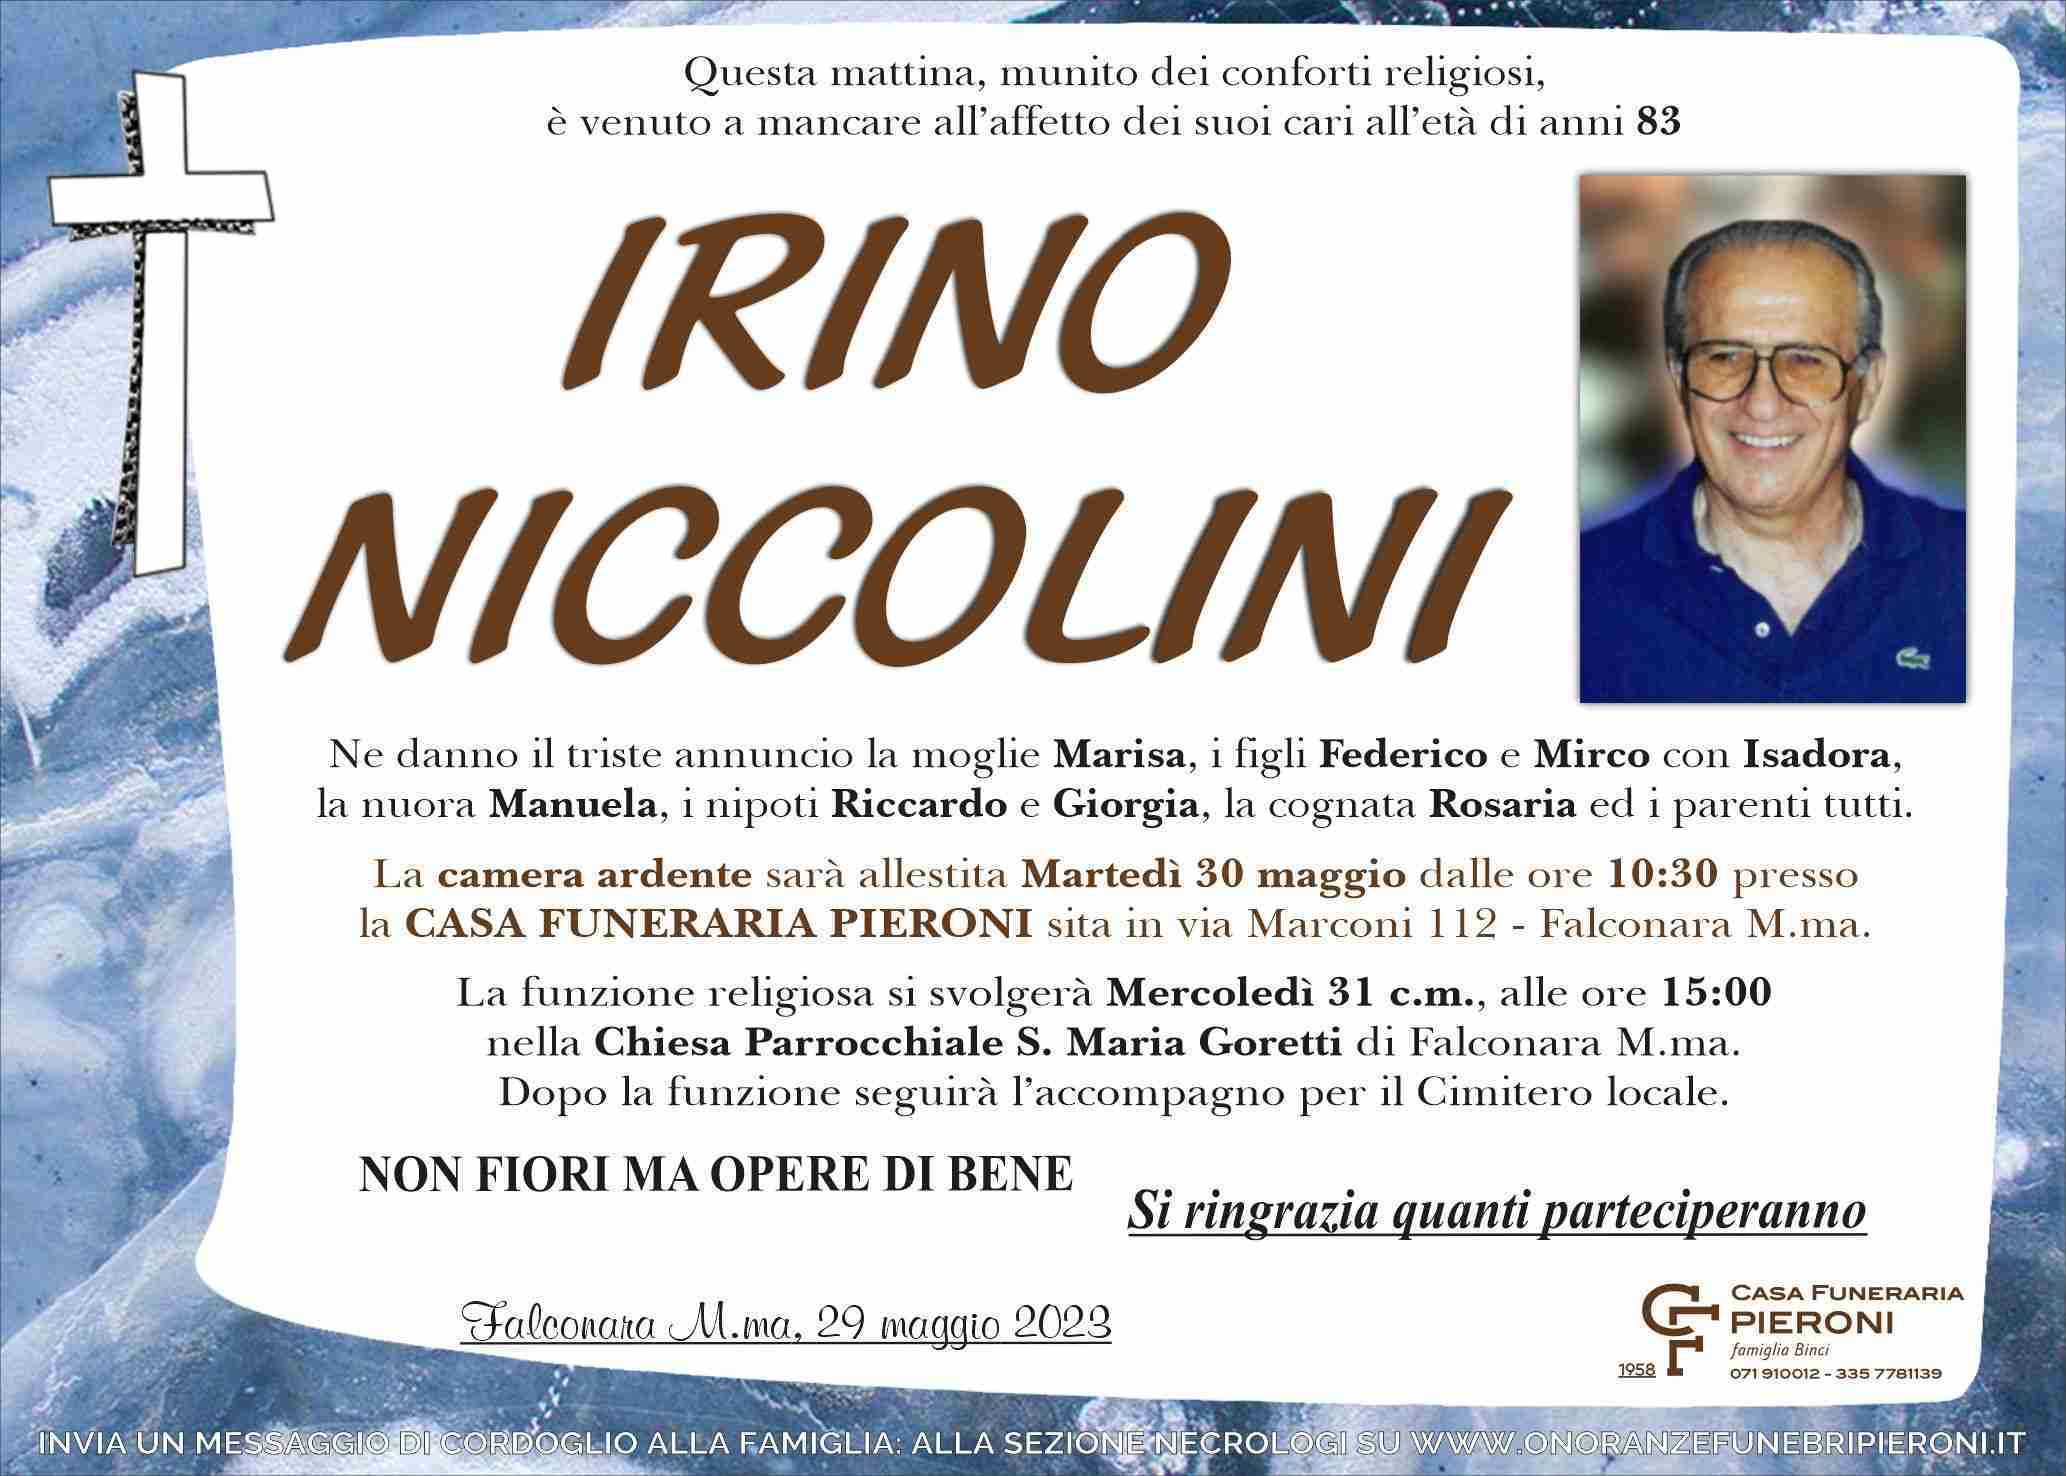 Irino Niccolini